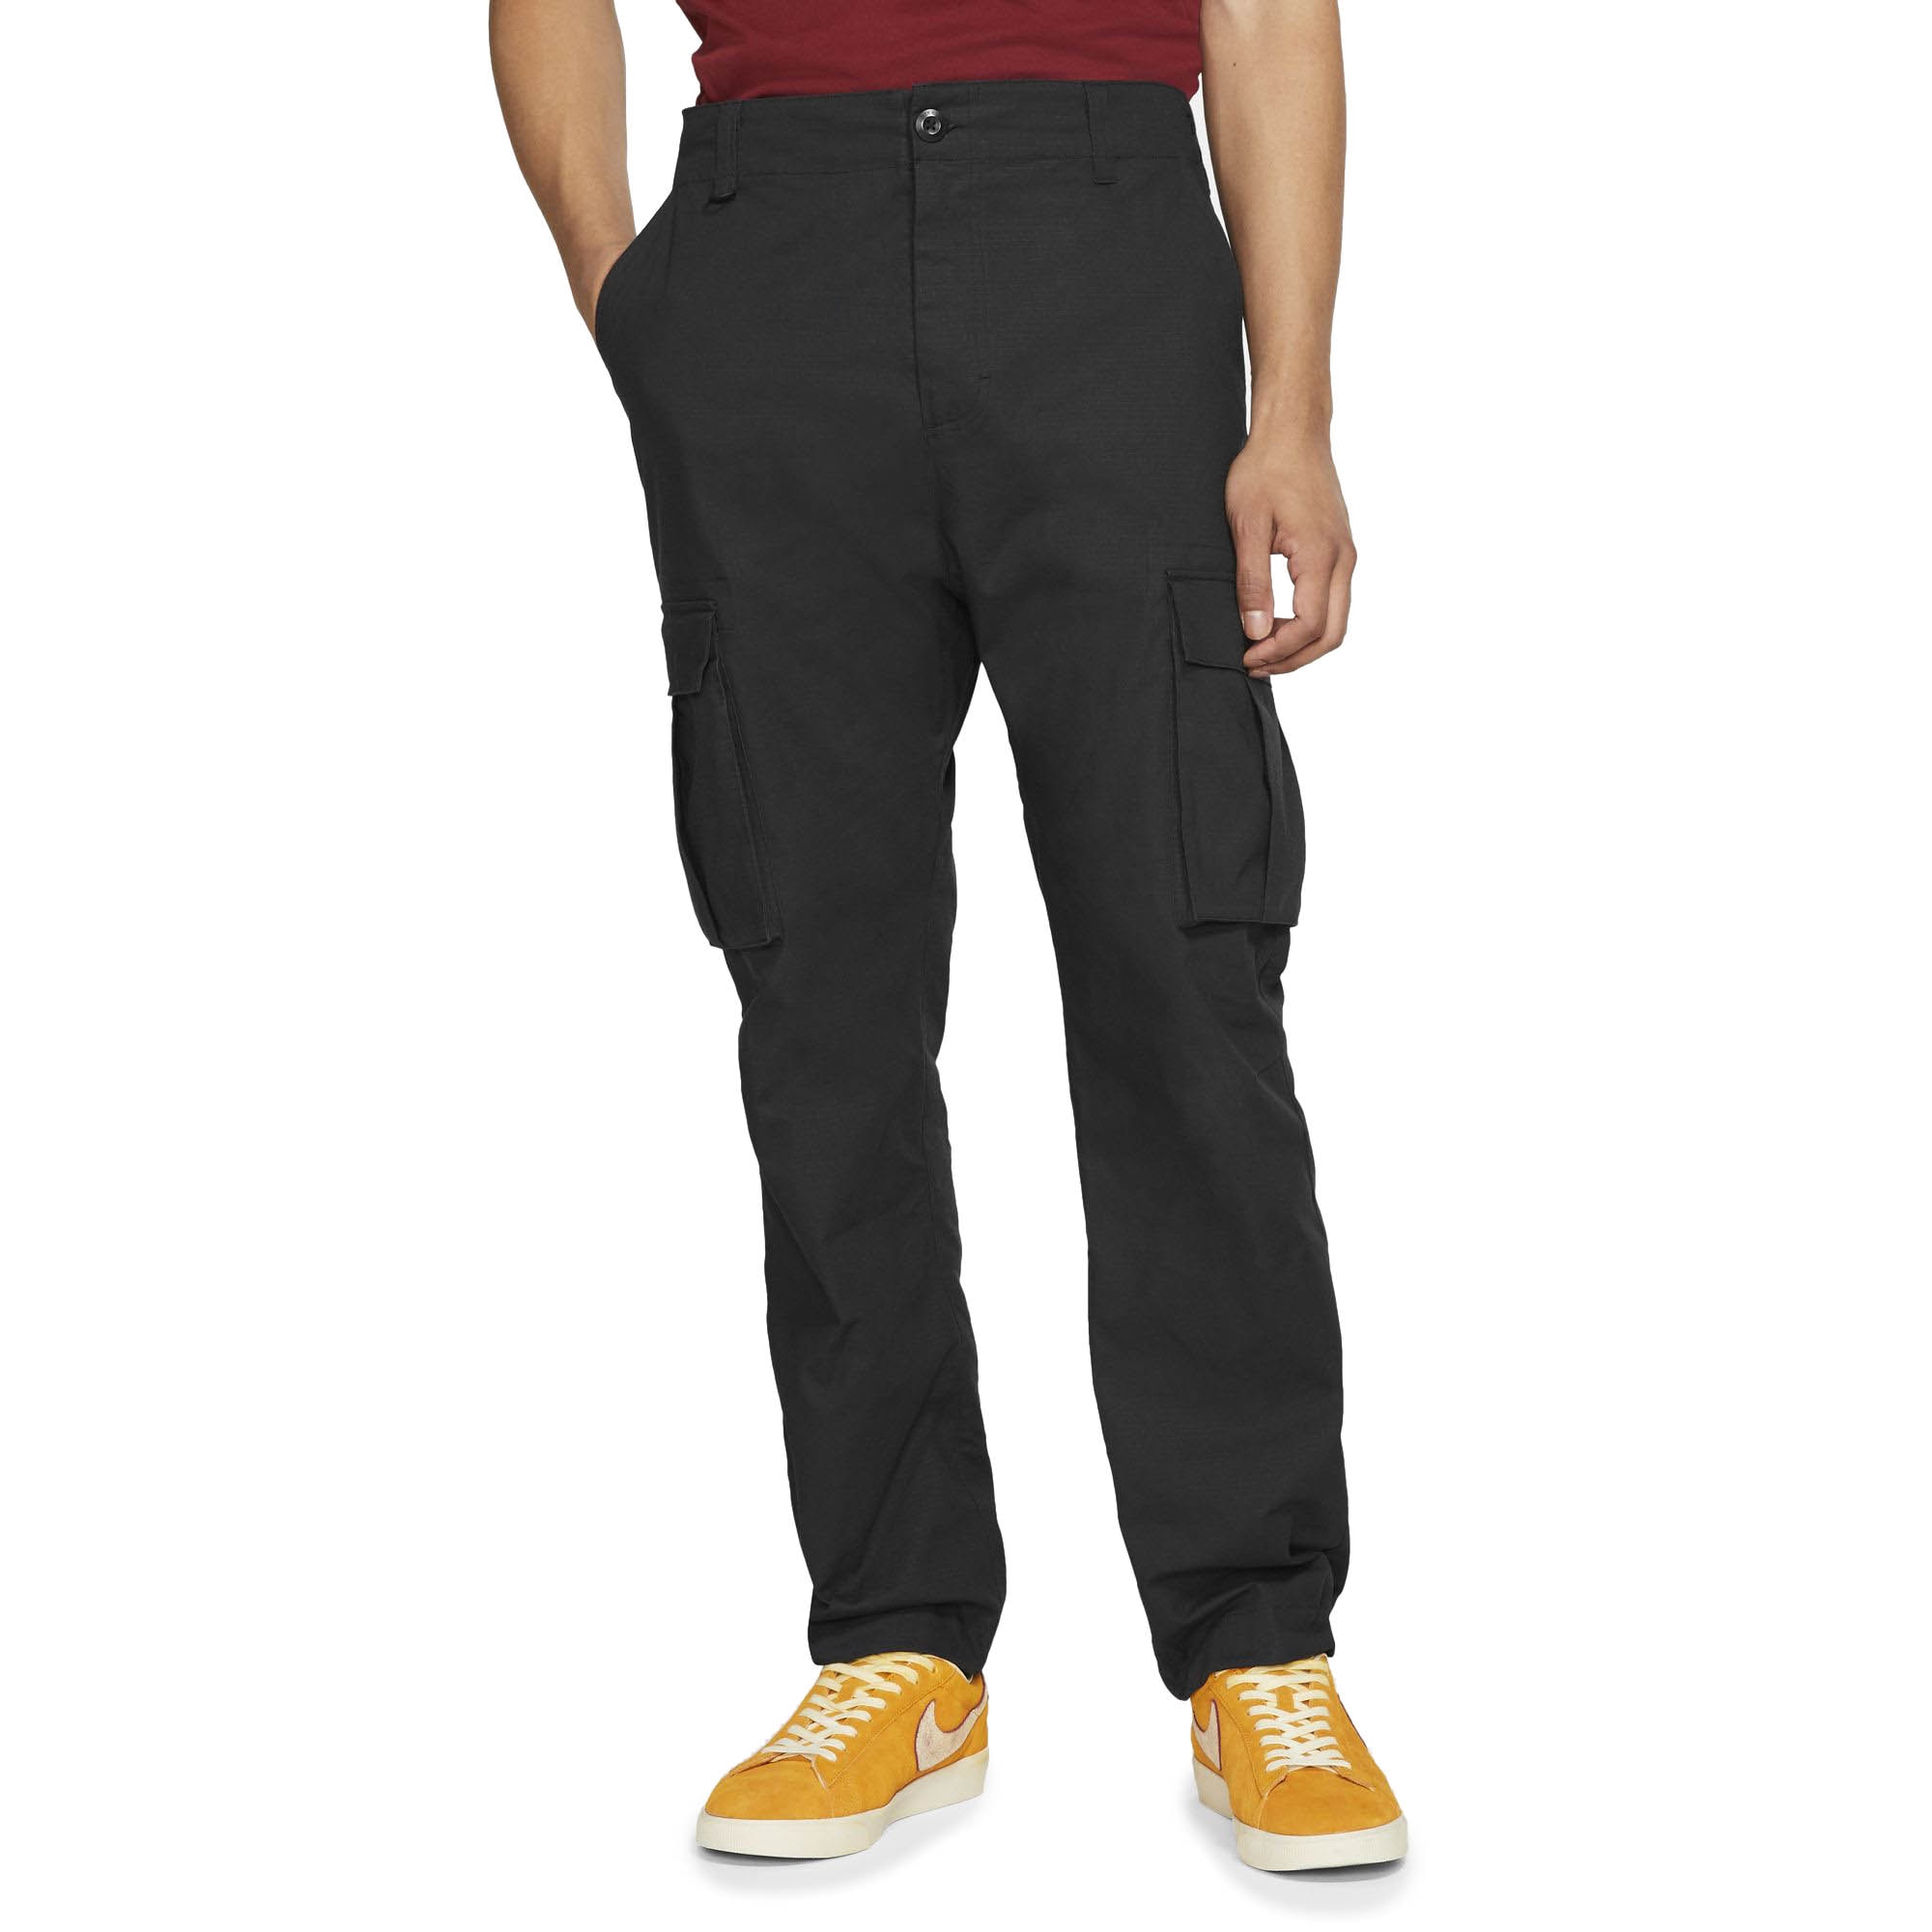 Pants Nike Flex FTM black | Snowboard Zezula